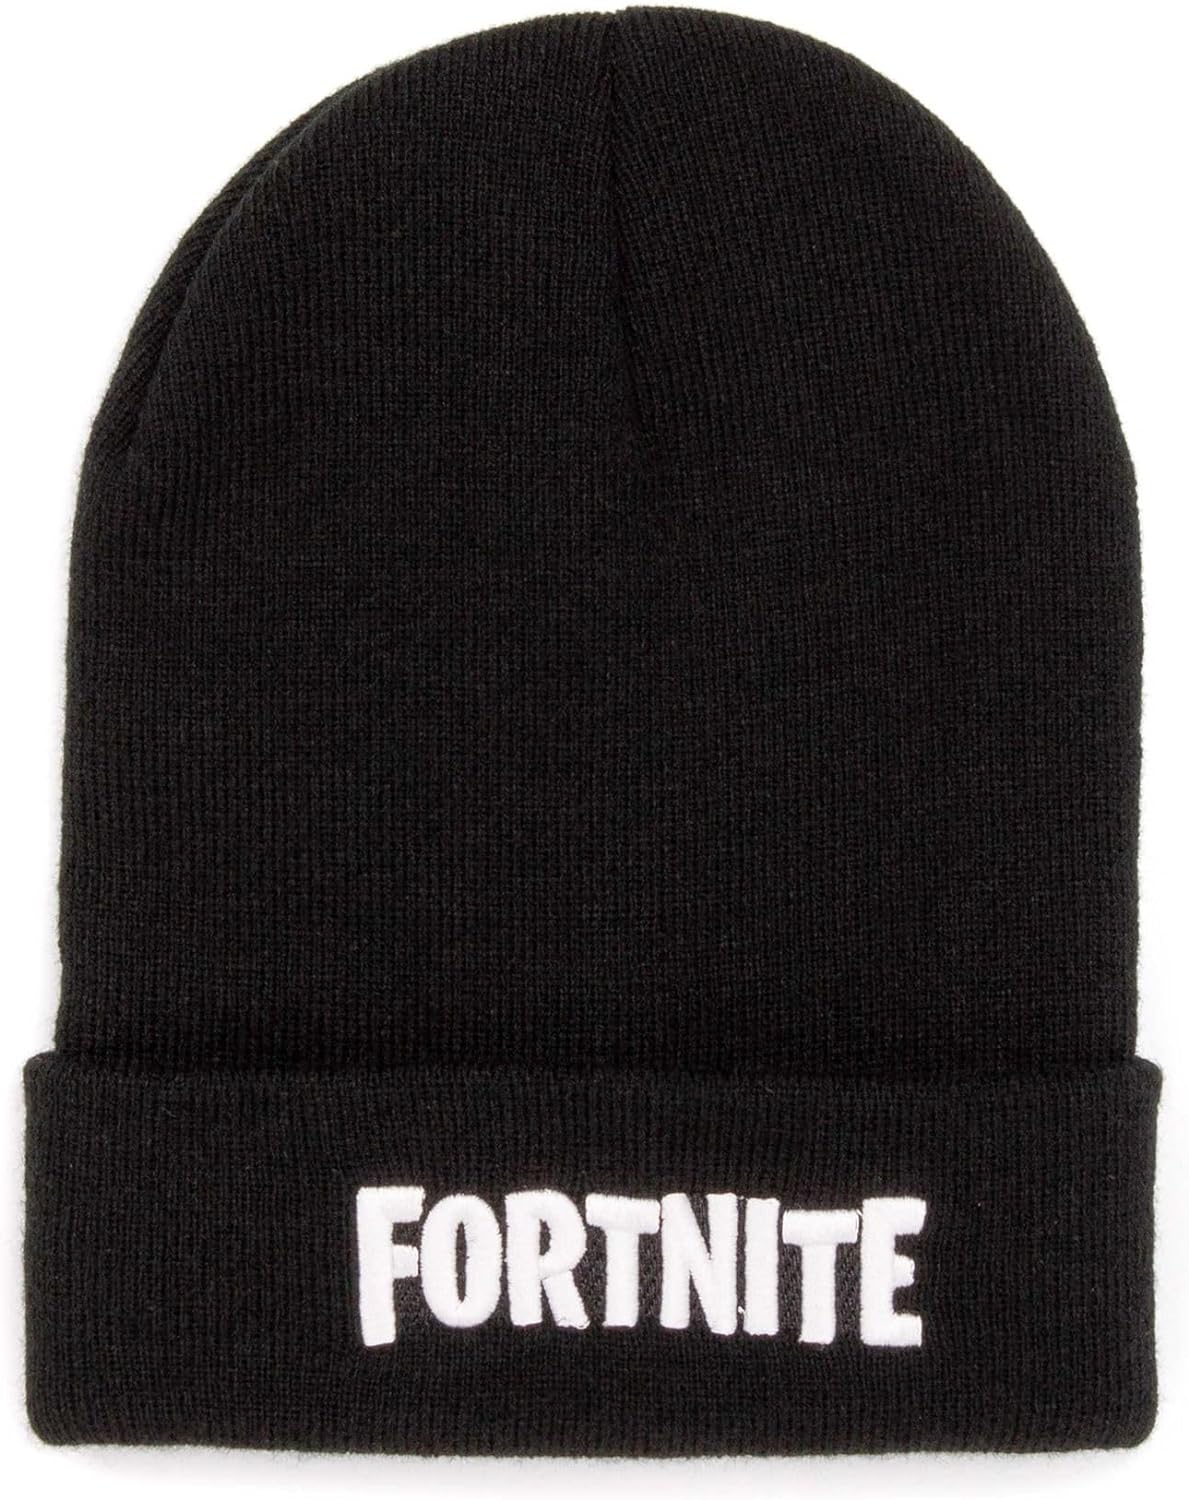 FORTNITE Beanie for Boys | Official Battle Royale Gaming Logo Black Hat | Game Merchandise